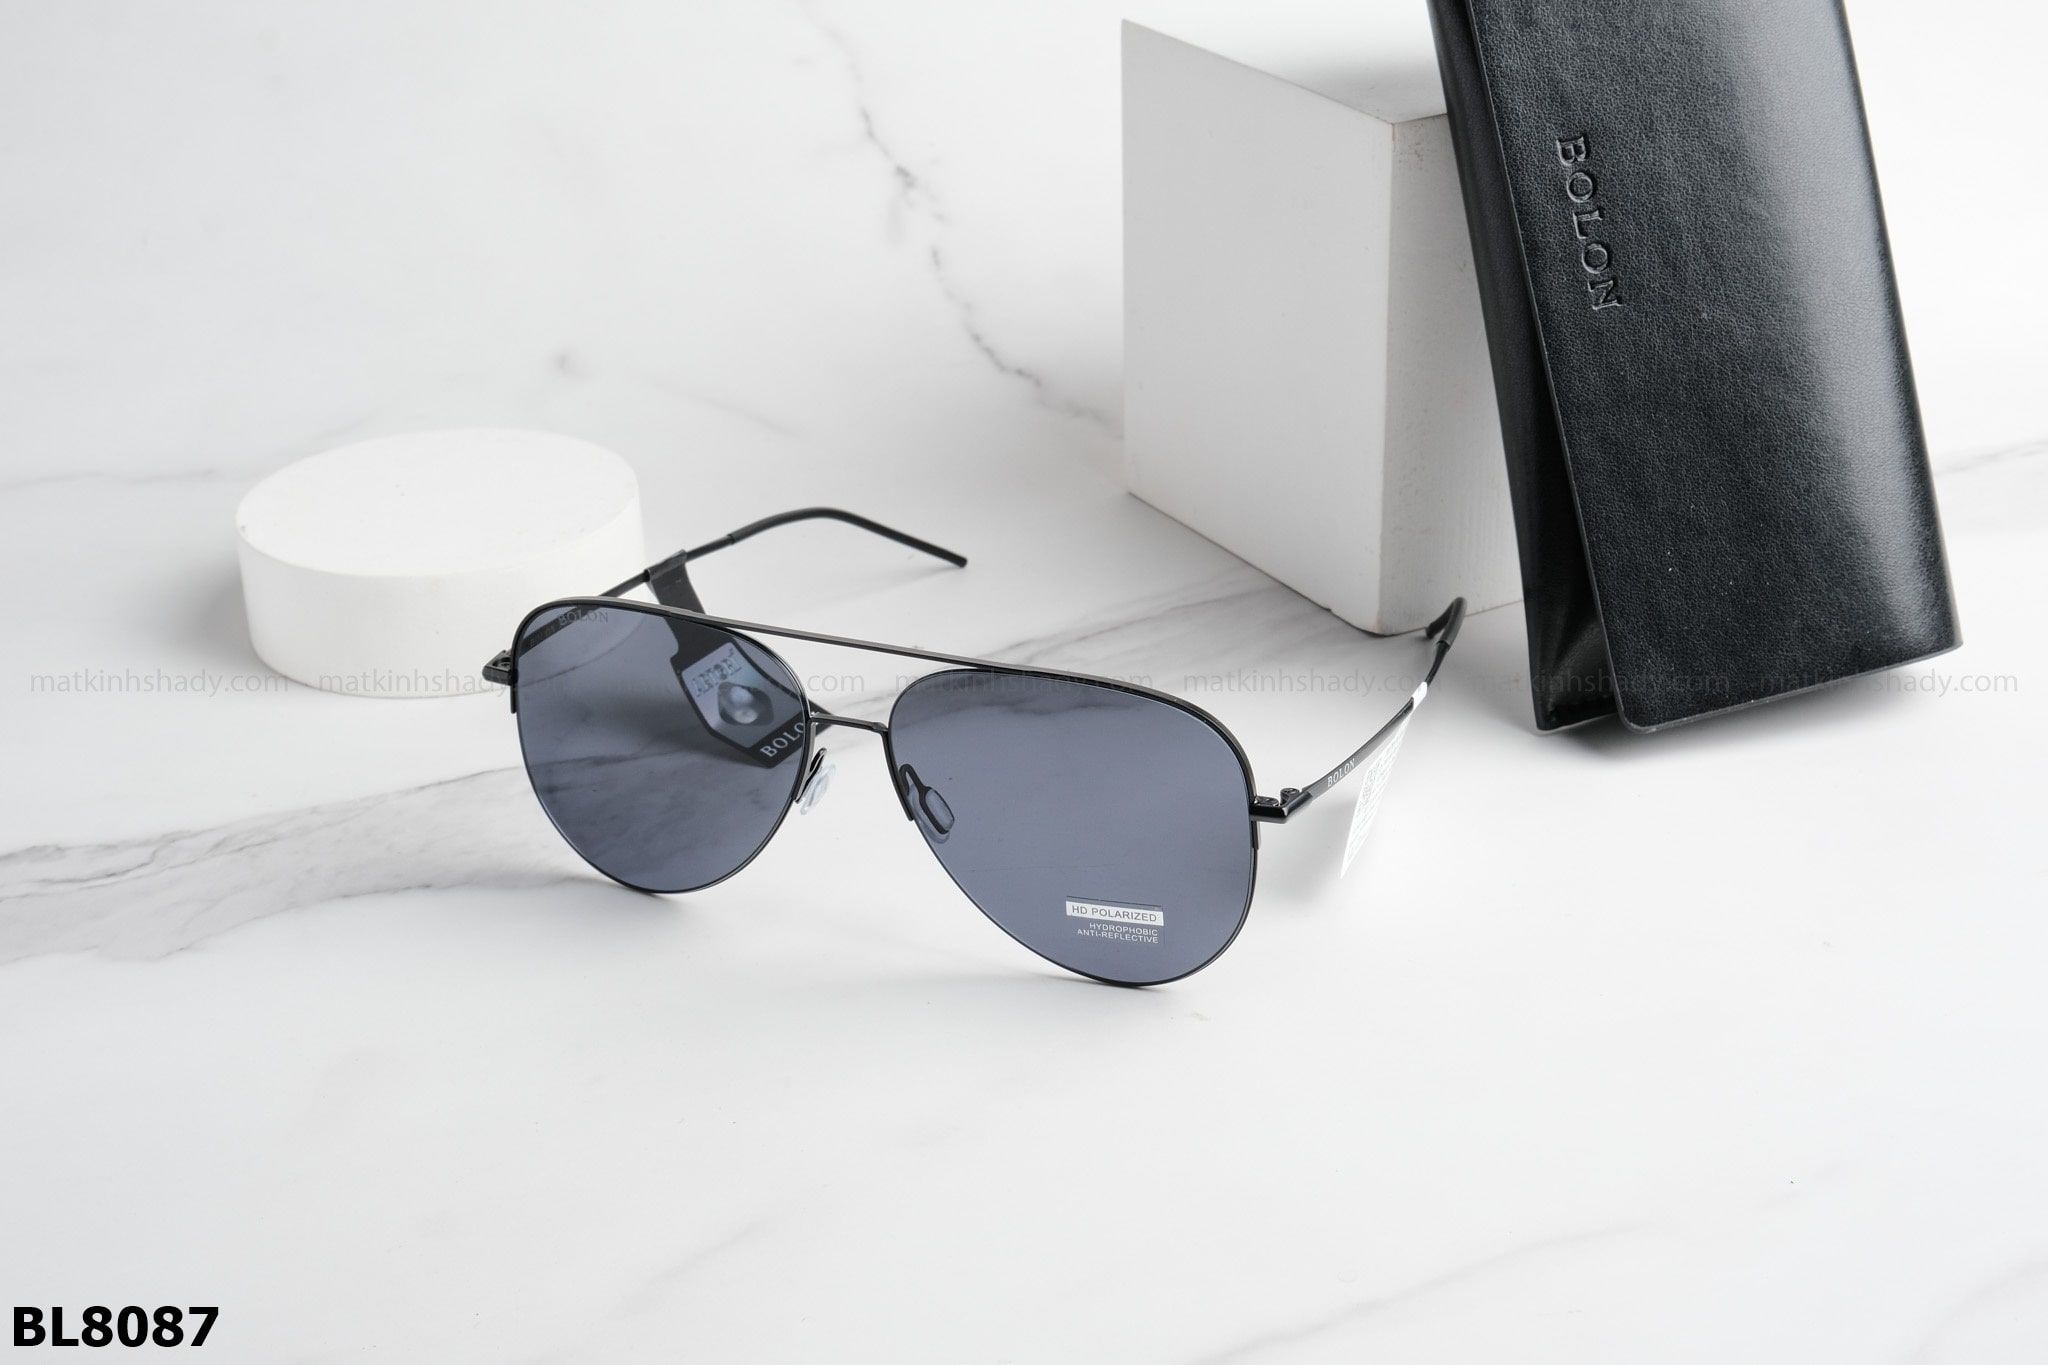  Bolon Eyewear - Sunglasses - BL8087 